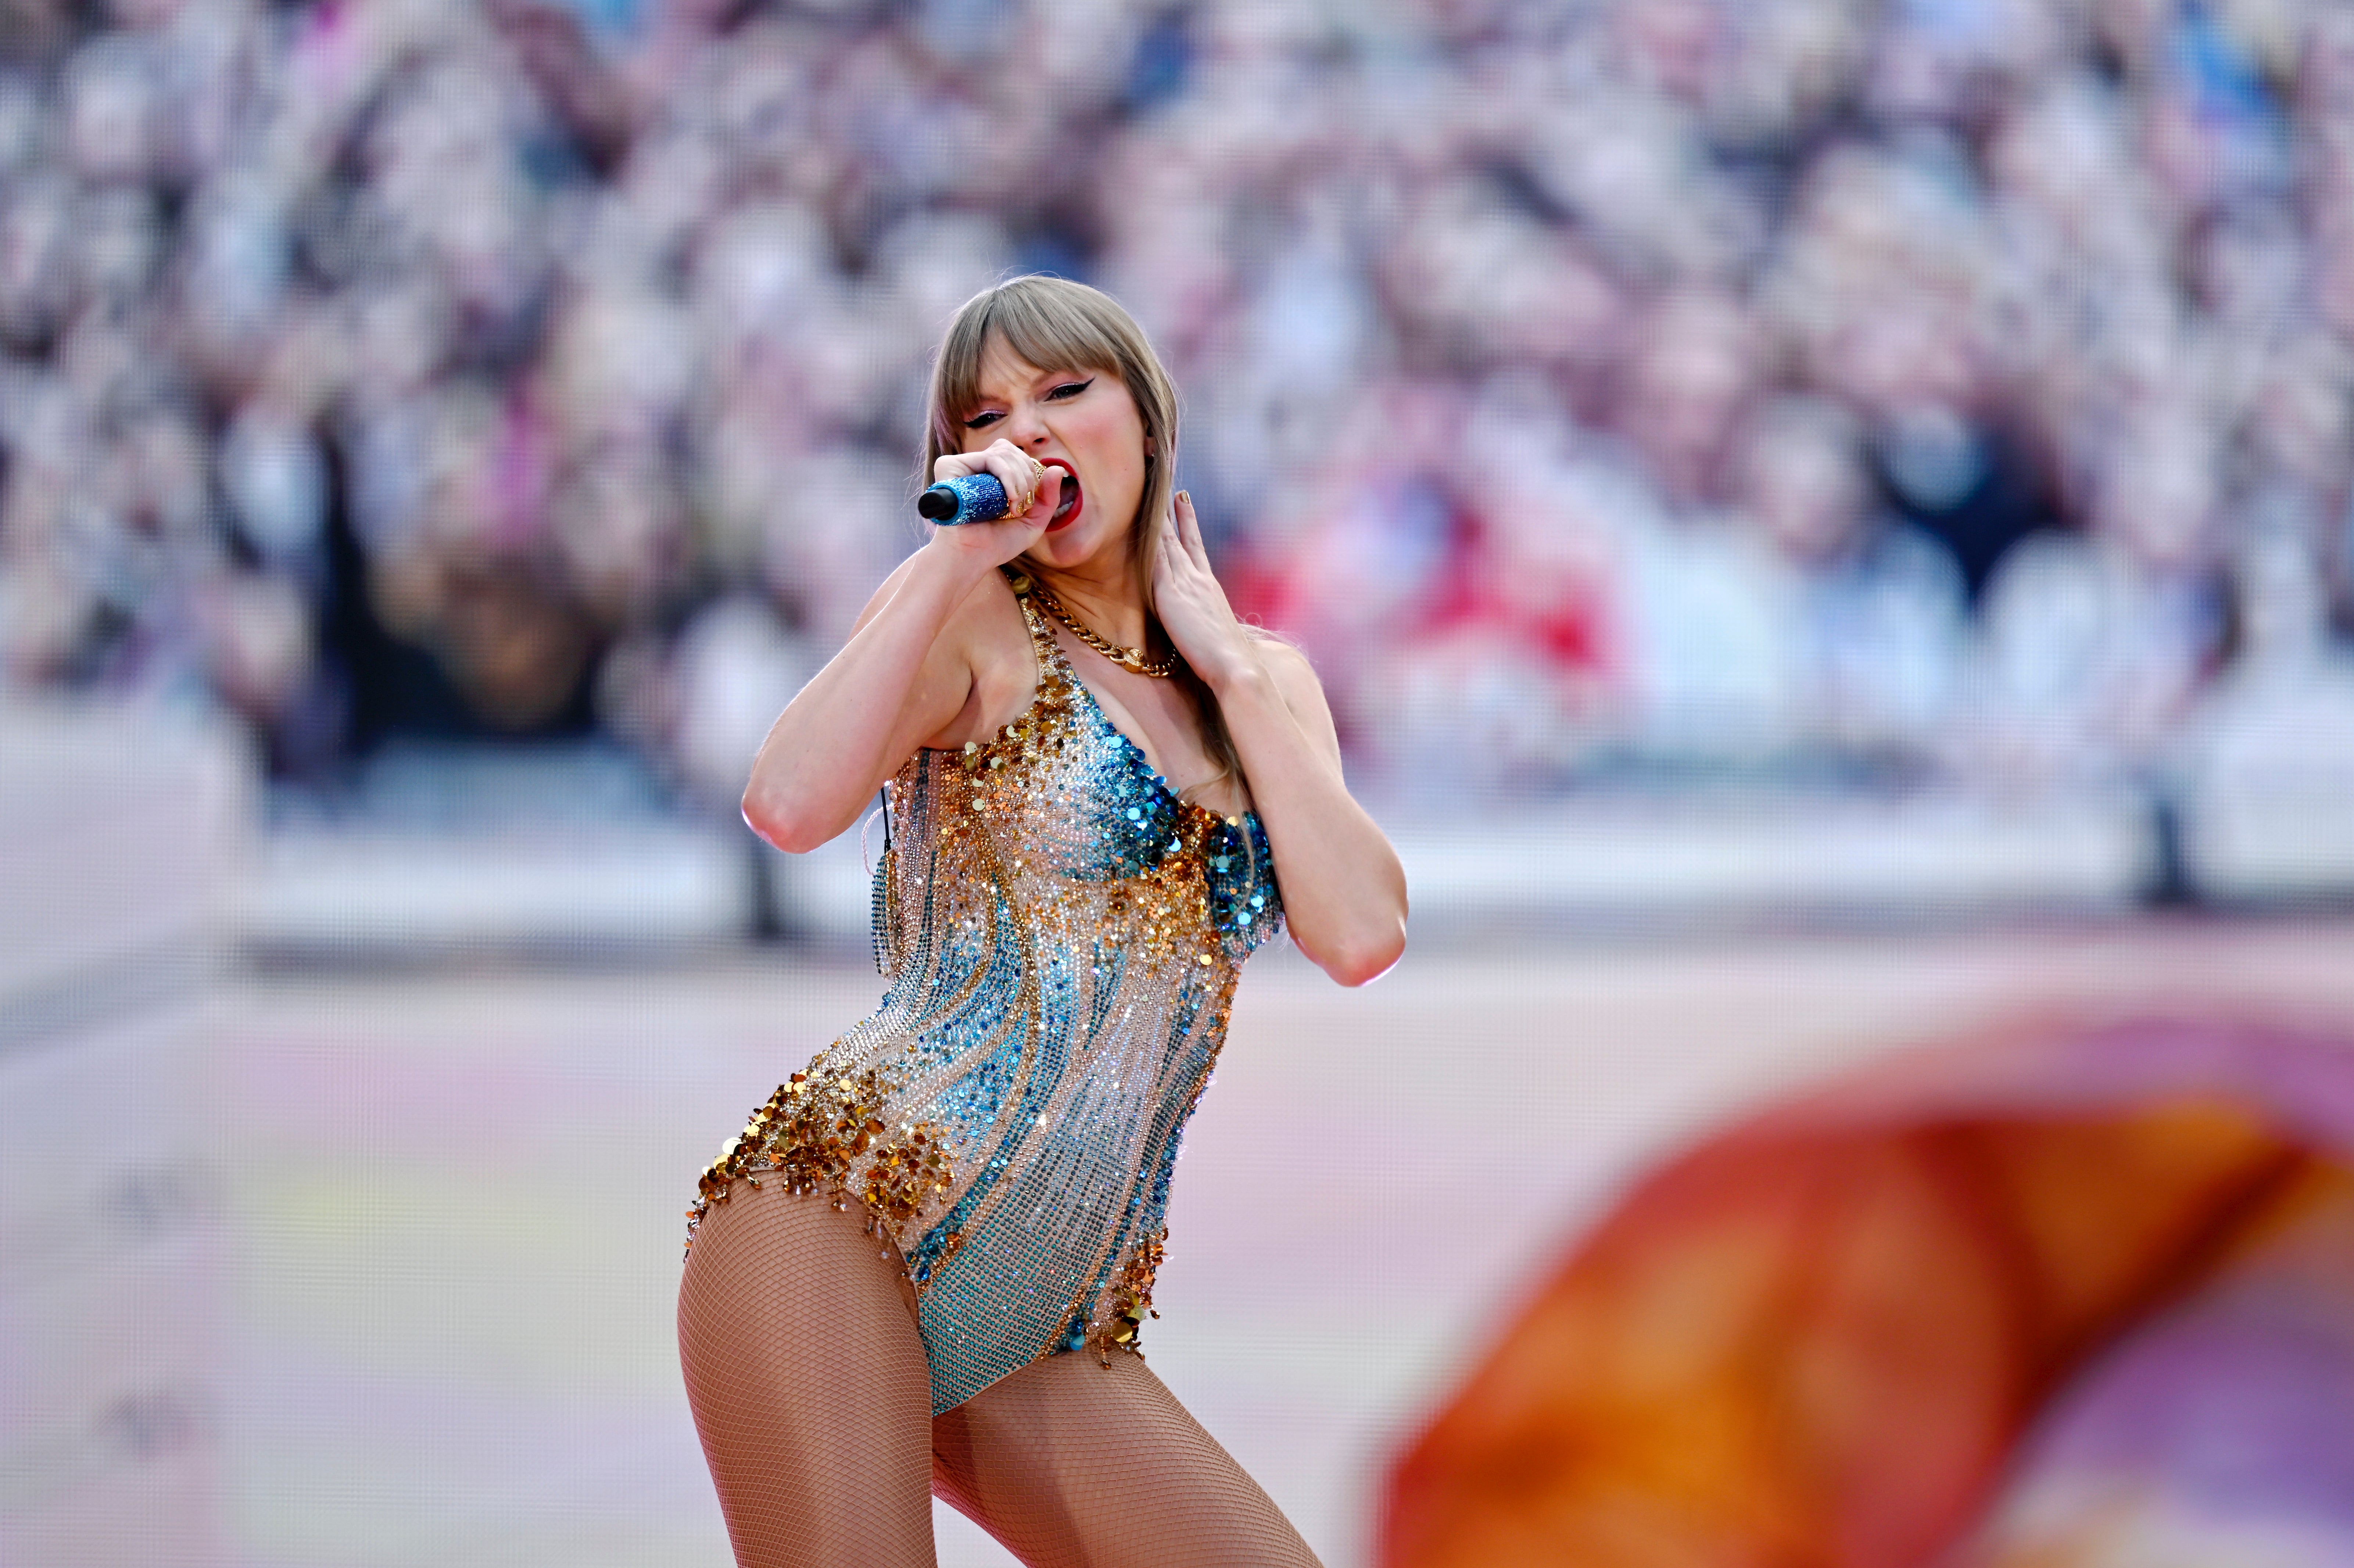 Swift performing at London’s Wembley Stadium